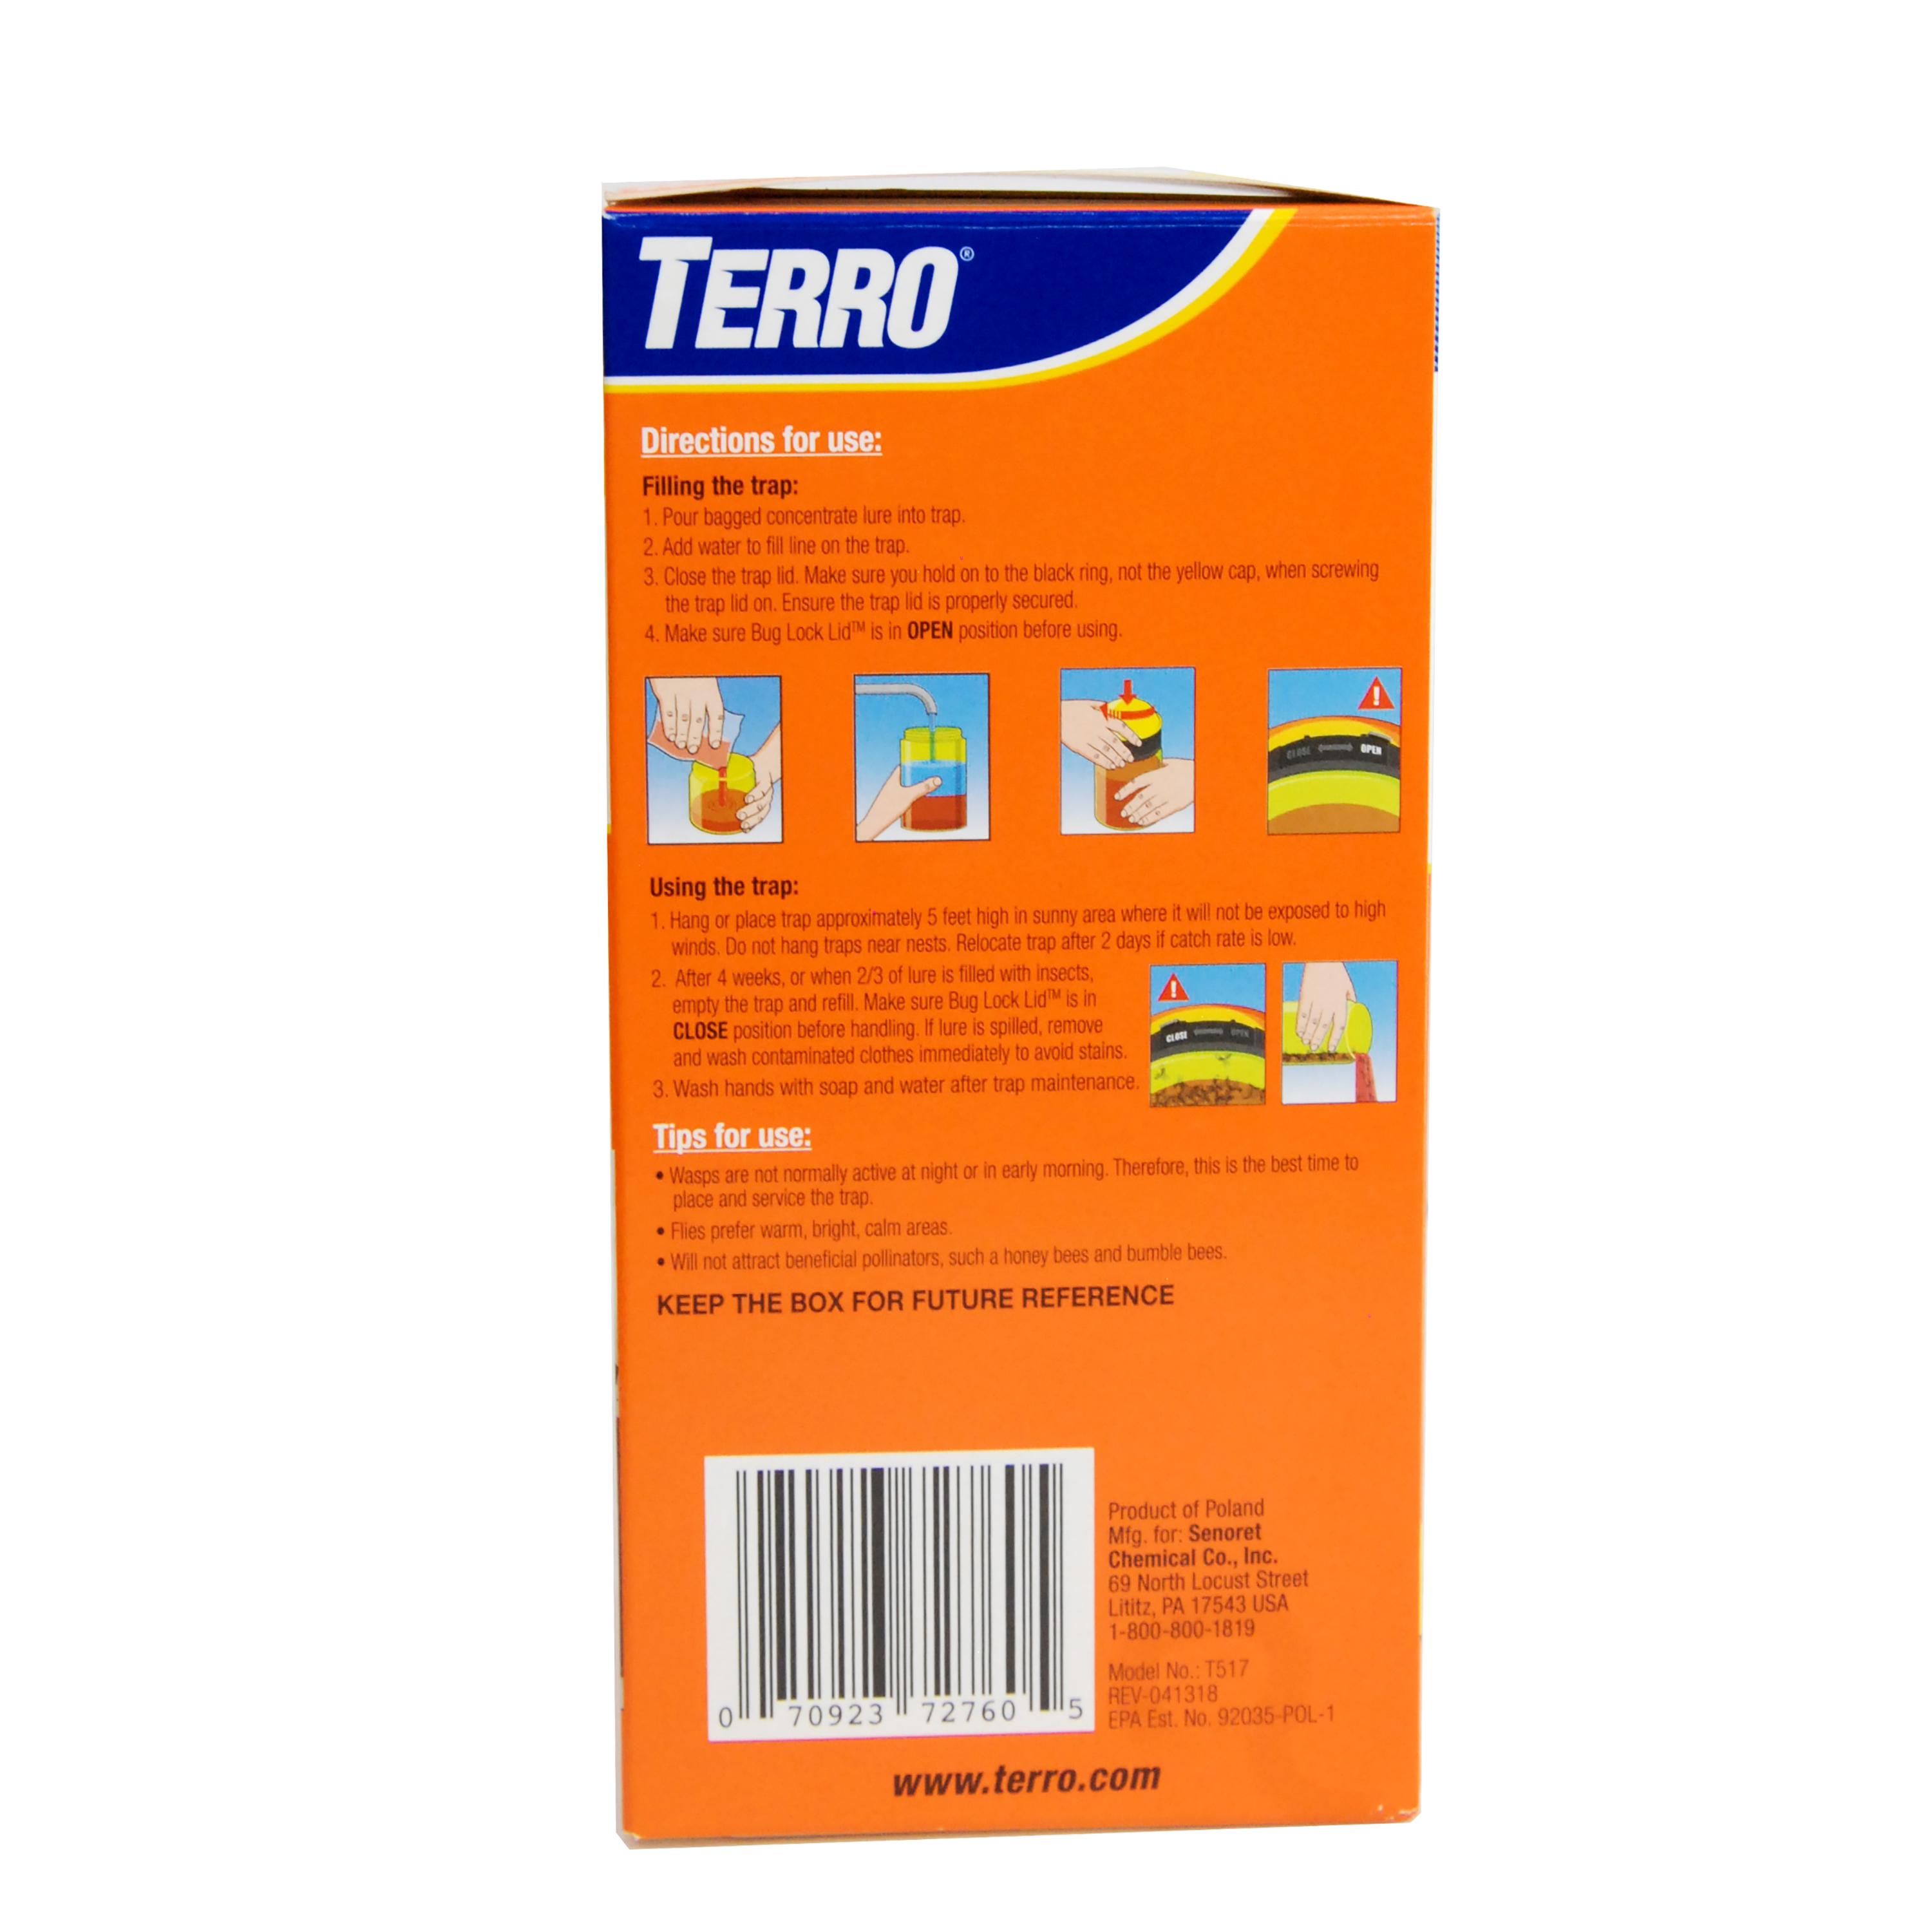 Terro T517 Wasp & Fly Trap Plus Fruit Fly – Refill – Sherwood